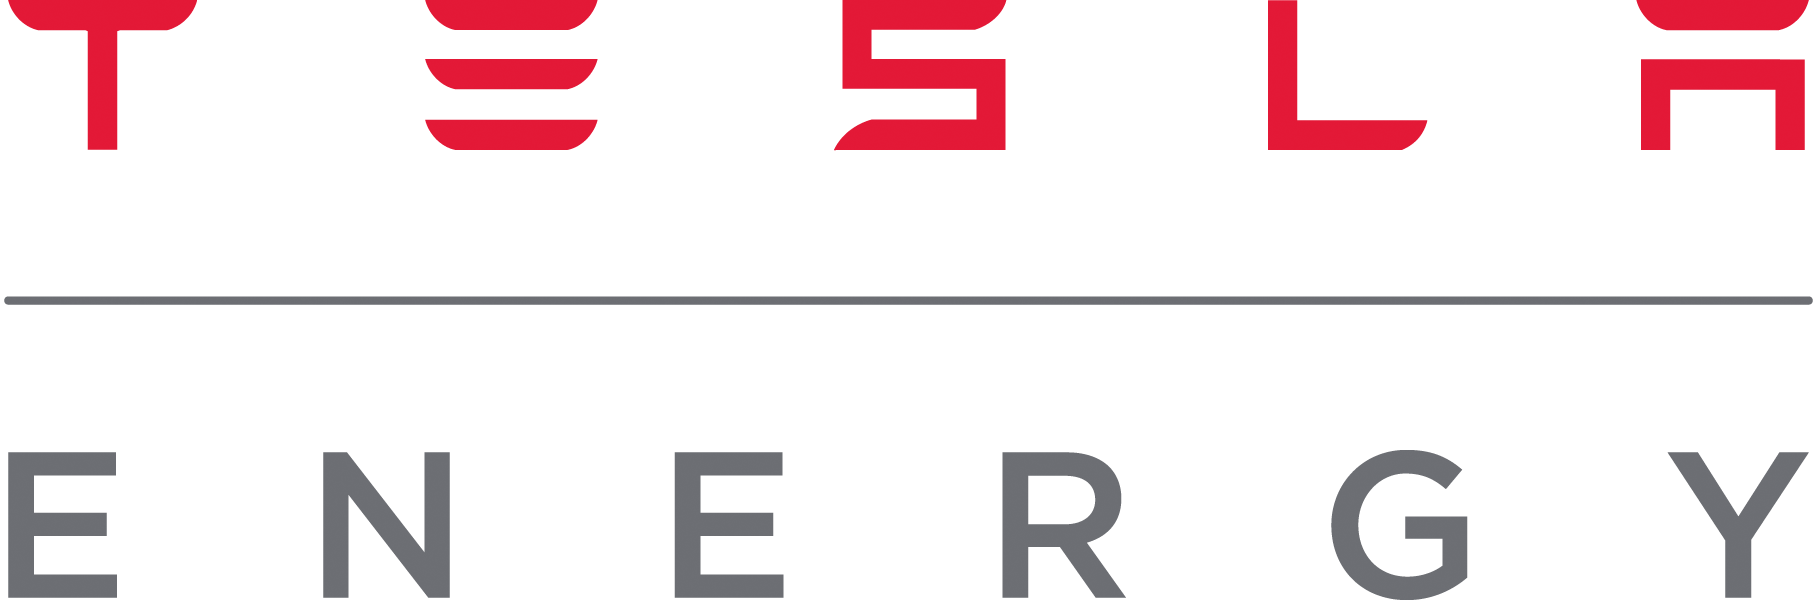 Texar Logo PNG Transparent & SVG Vector - Freebie Supply